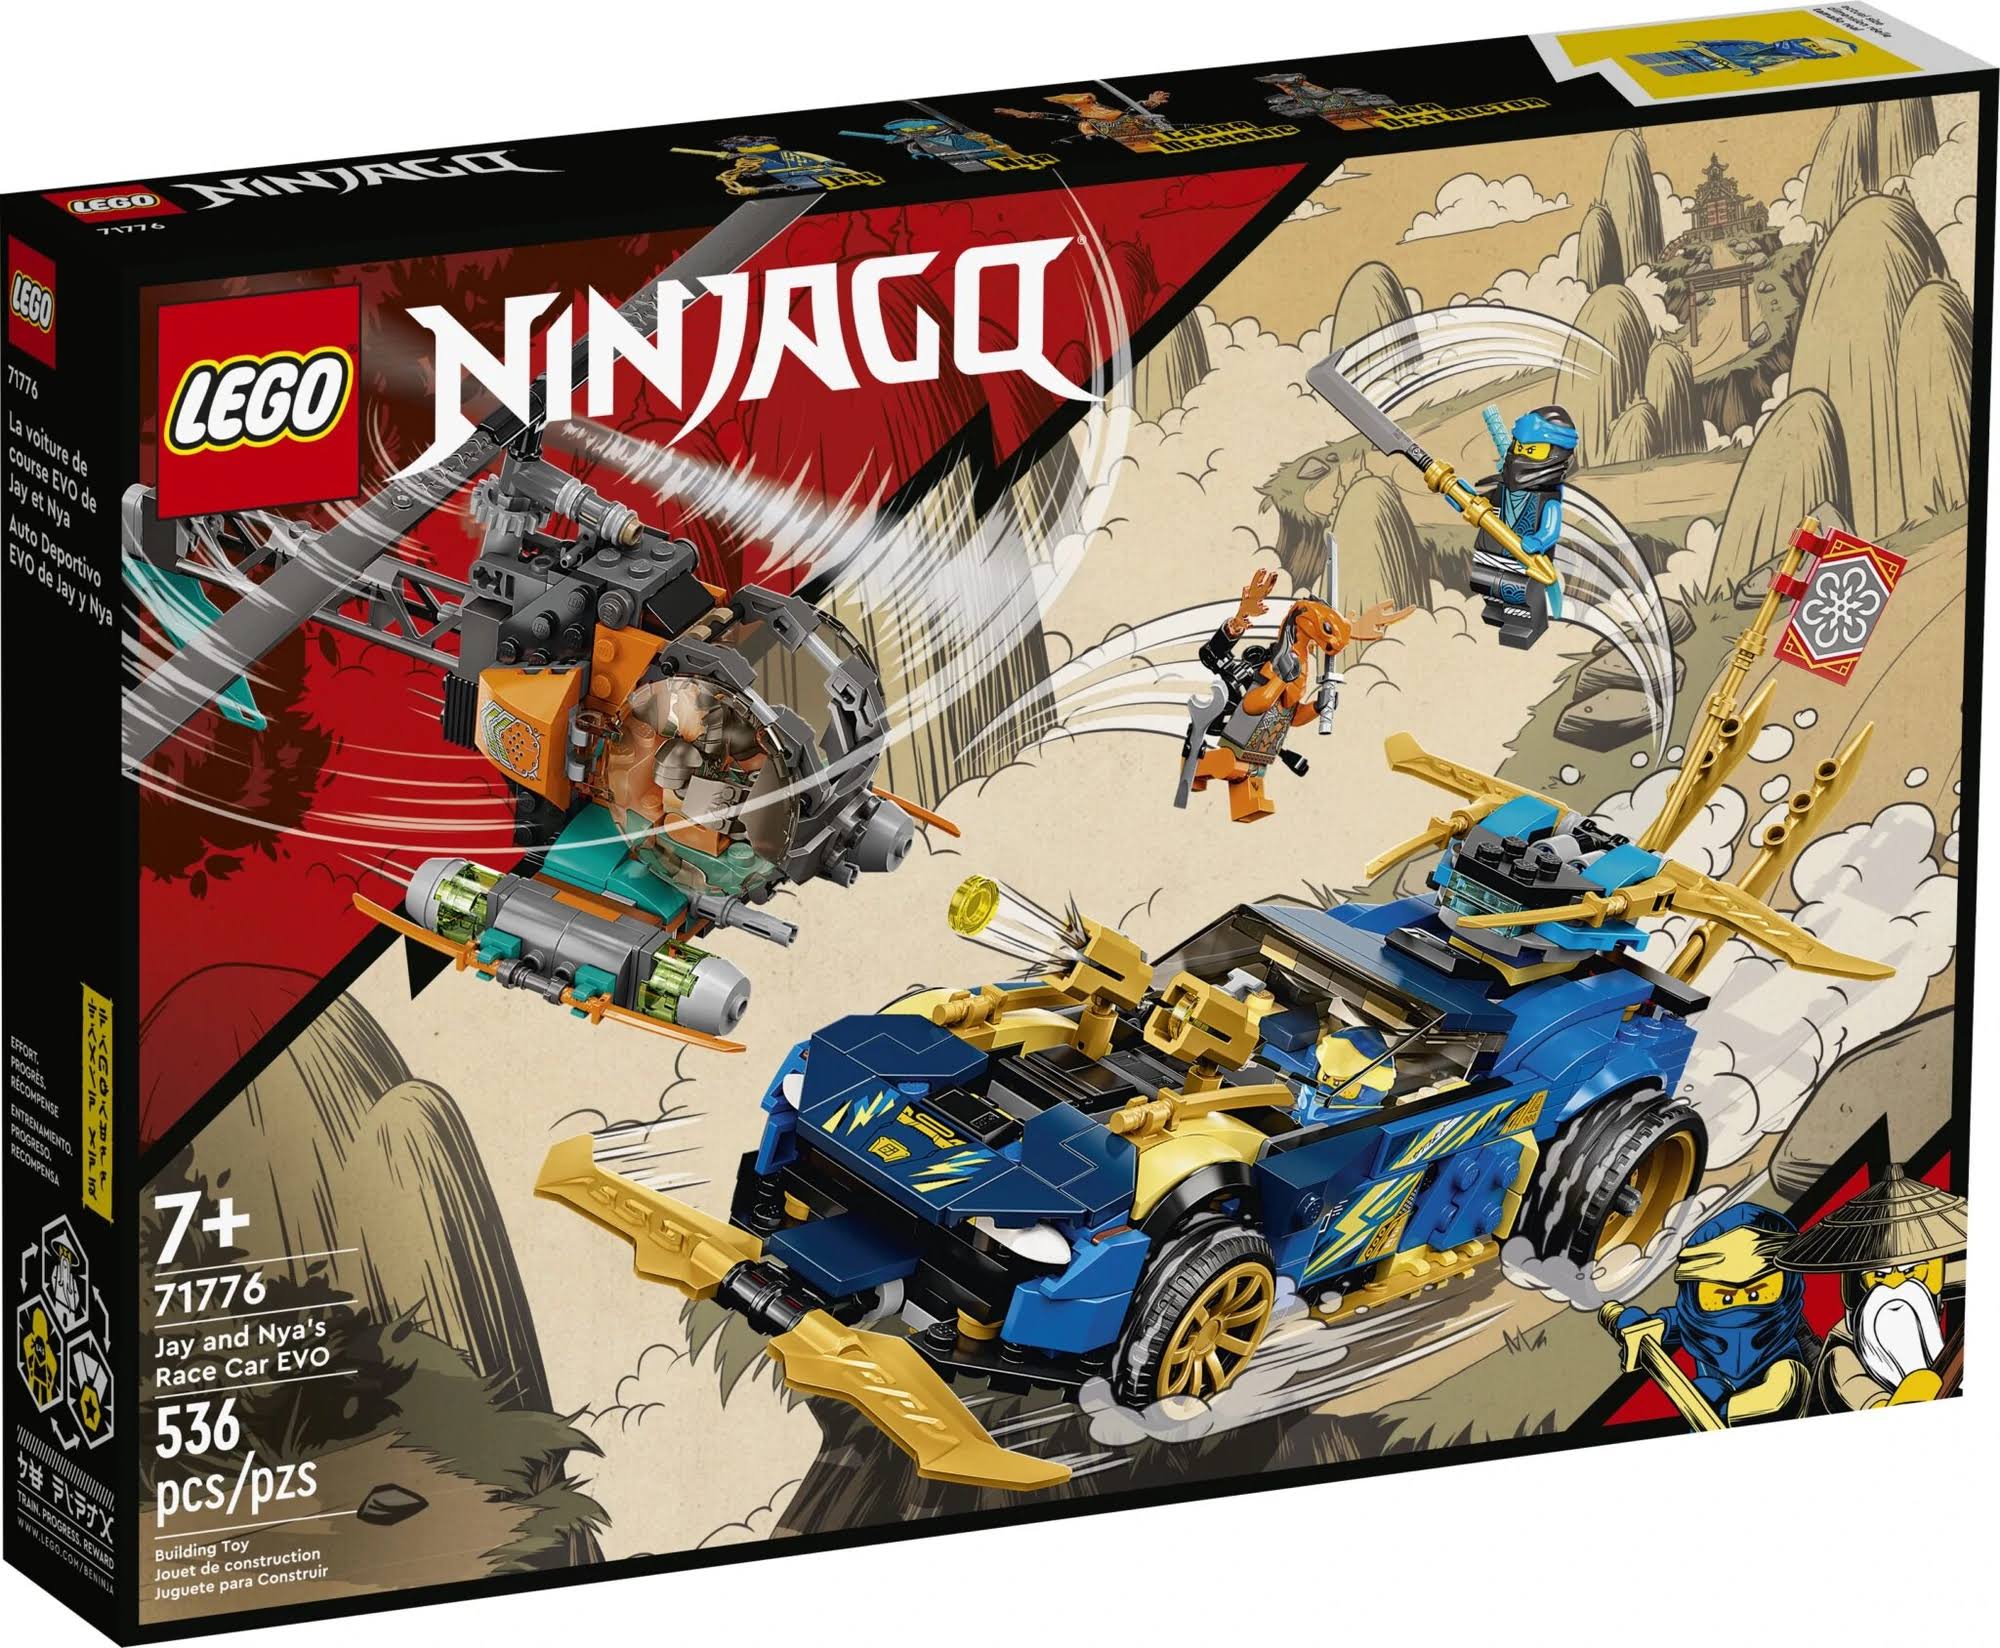 LEGO Ninjago Jay and Nya S Race Car Evo 71776 Building Kit 536 Pieces